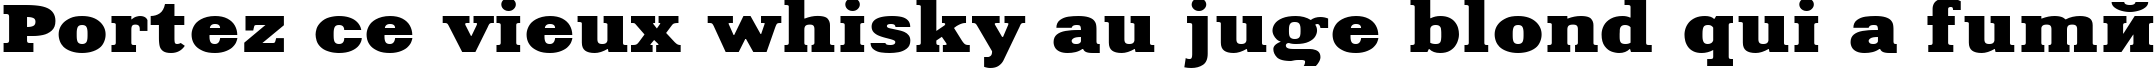 Пример написания шрифтом Aardvark110n текста на французском